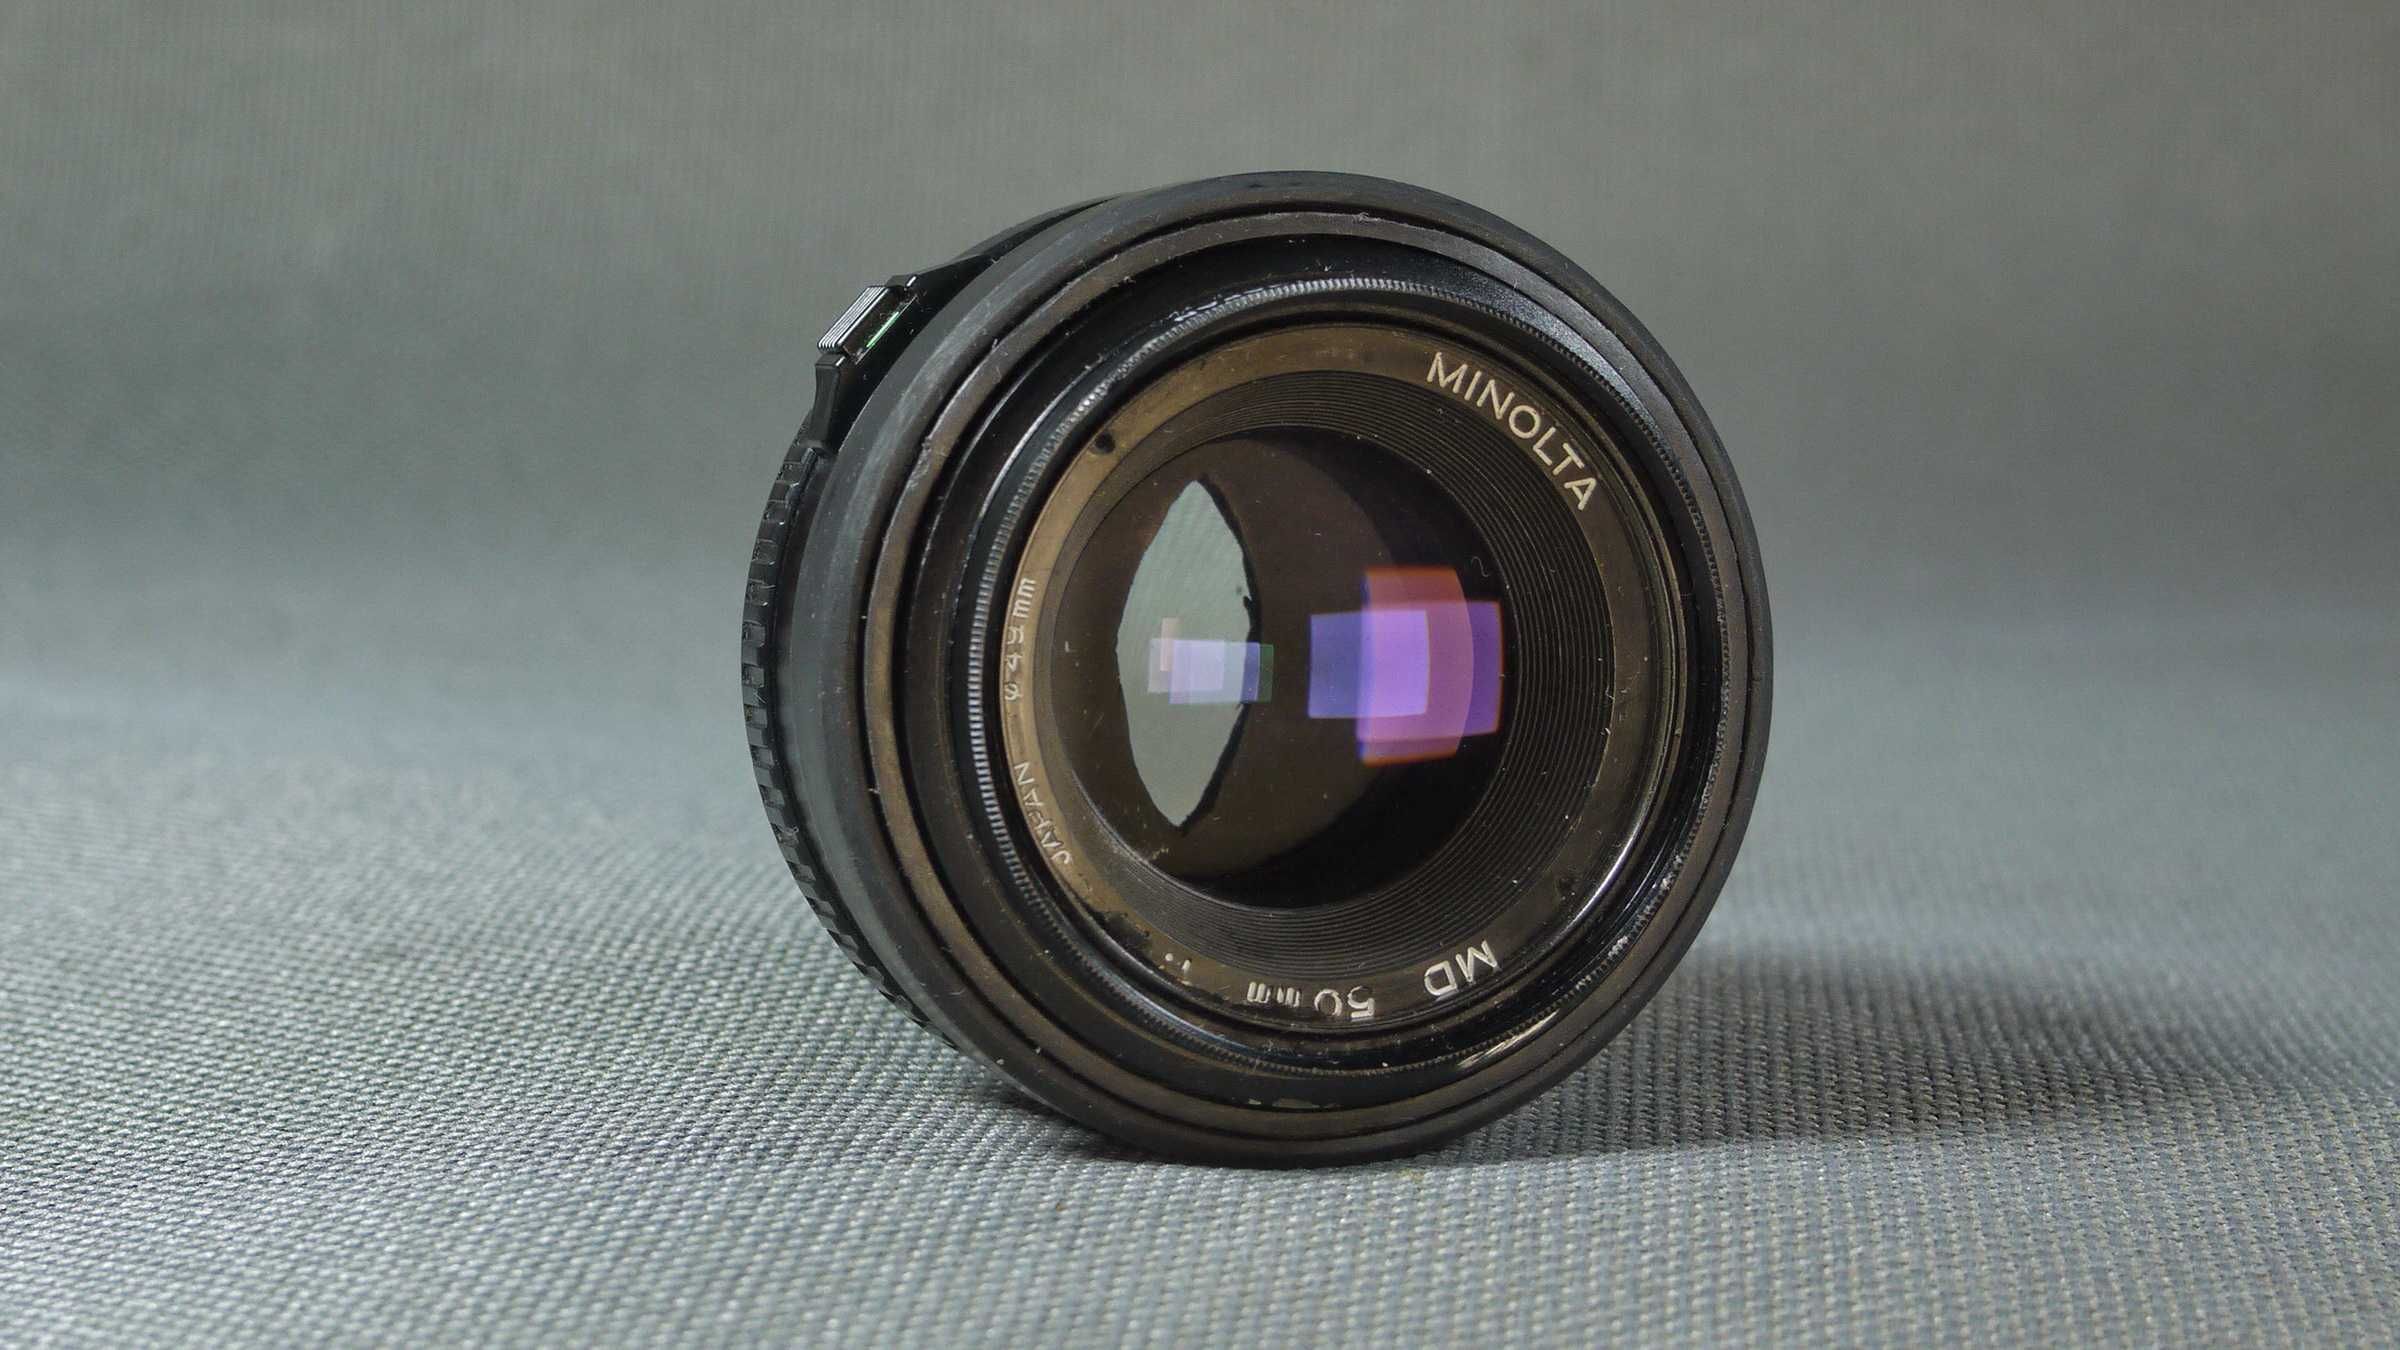 объектив Minolta 50mm/1.7 анаморфный для видеосъемки на кадр 24x36mm